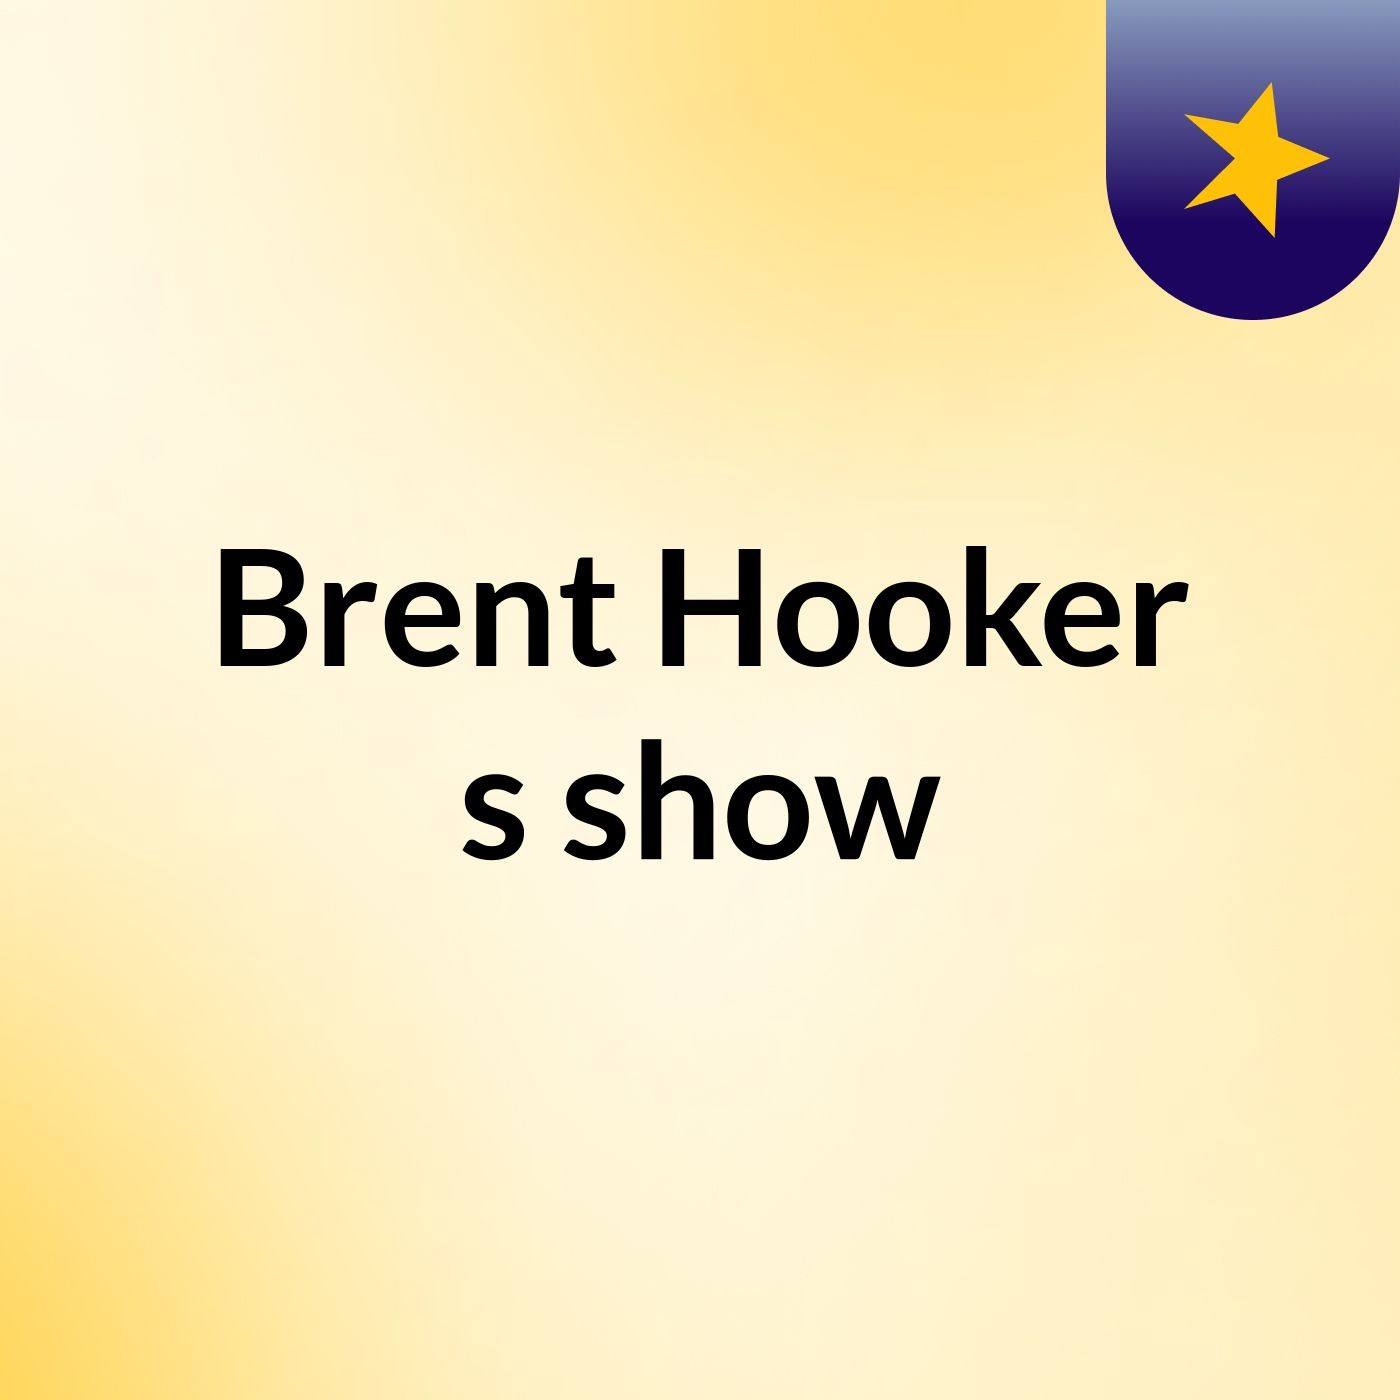 Episode 2 - Brent Hooker's show